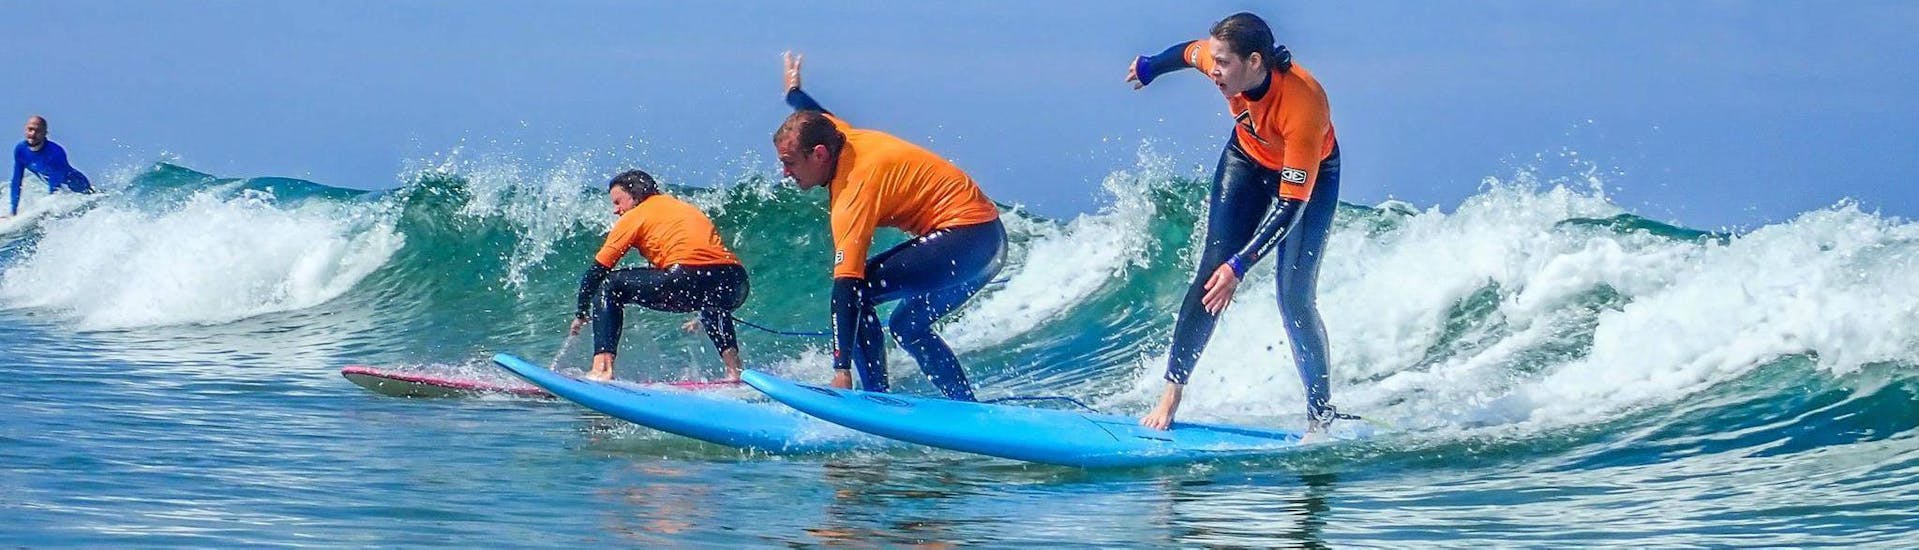 Lezioni di surf da 12 anni per tutti i livelli.